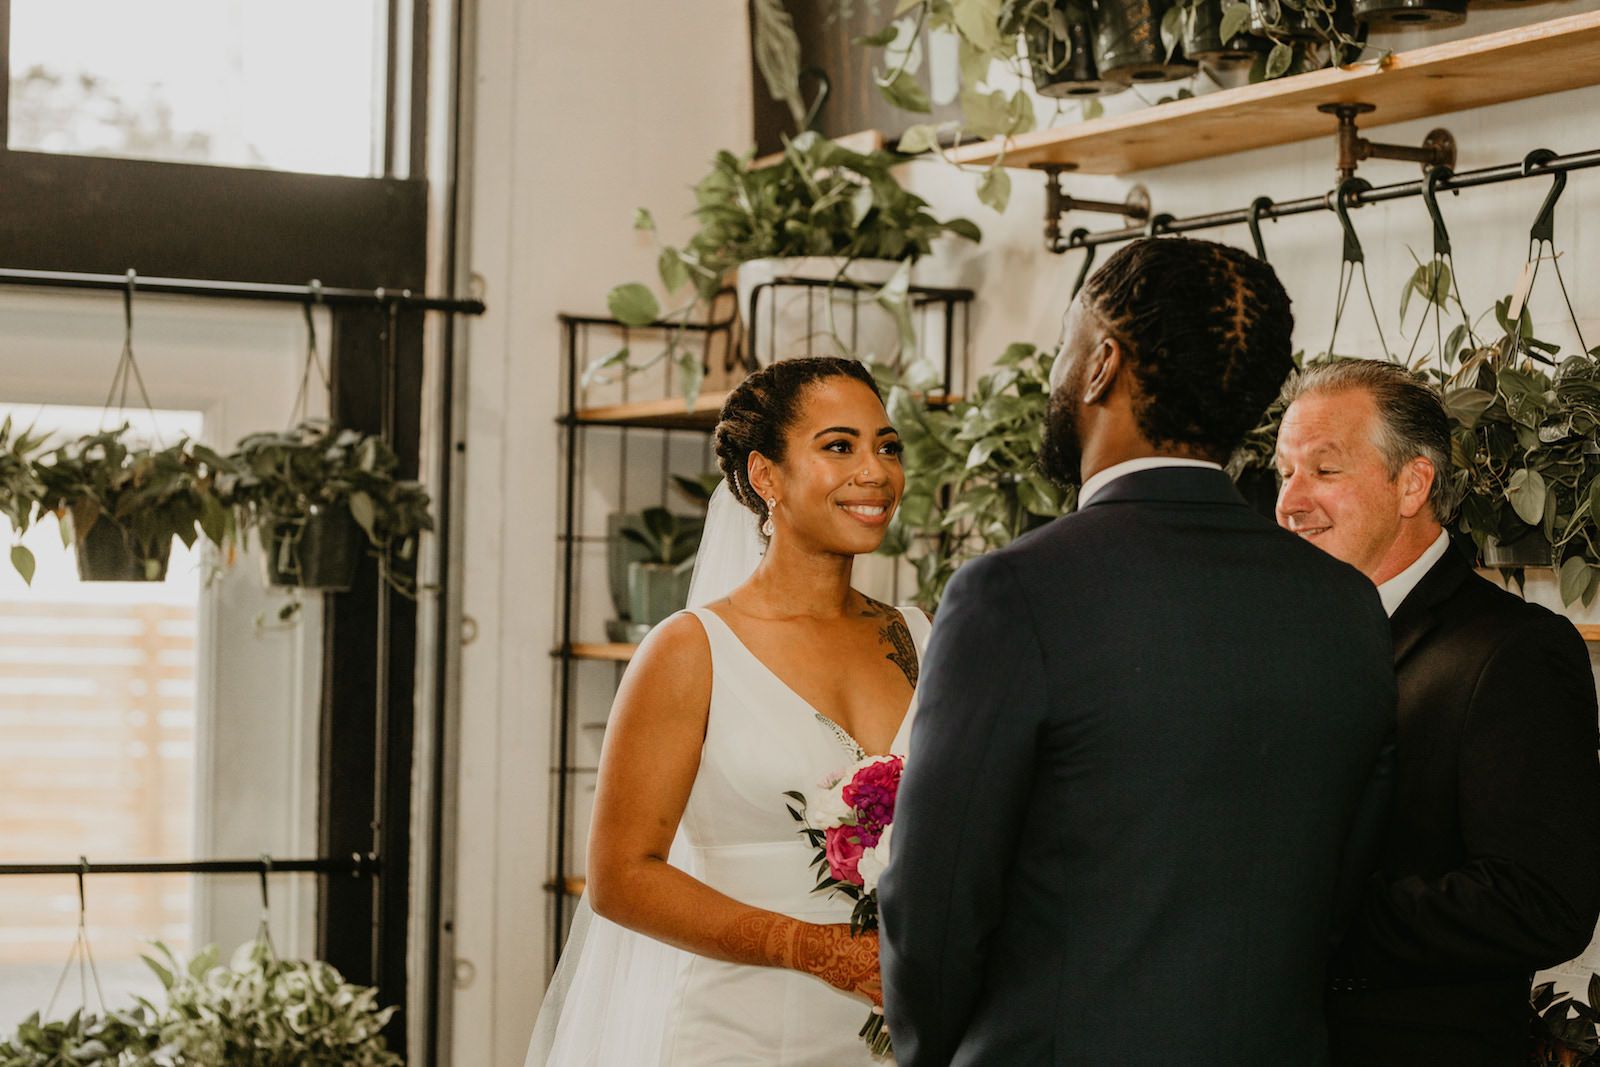 Intimate Elopement Wedding Ceremony, Bride and Groom Exchanging Wedding Vows at Unique Plant Shop Wedding Venue Wild Roots | Tampa Bay Wedding Planner Elope Tampa Bay